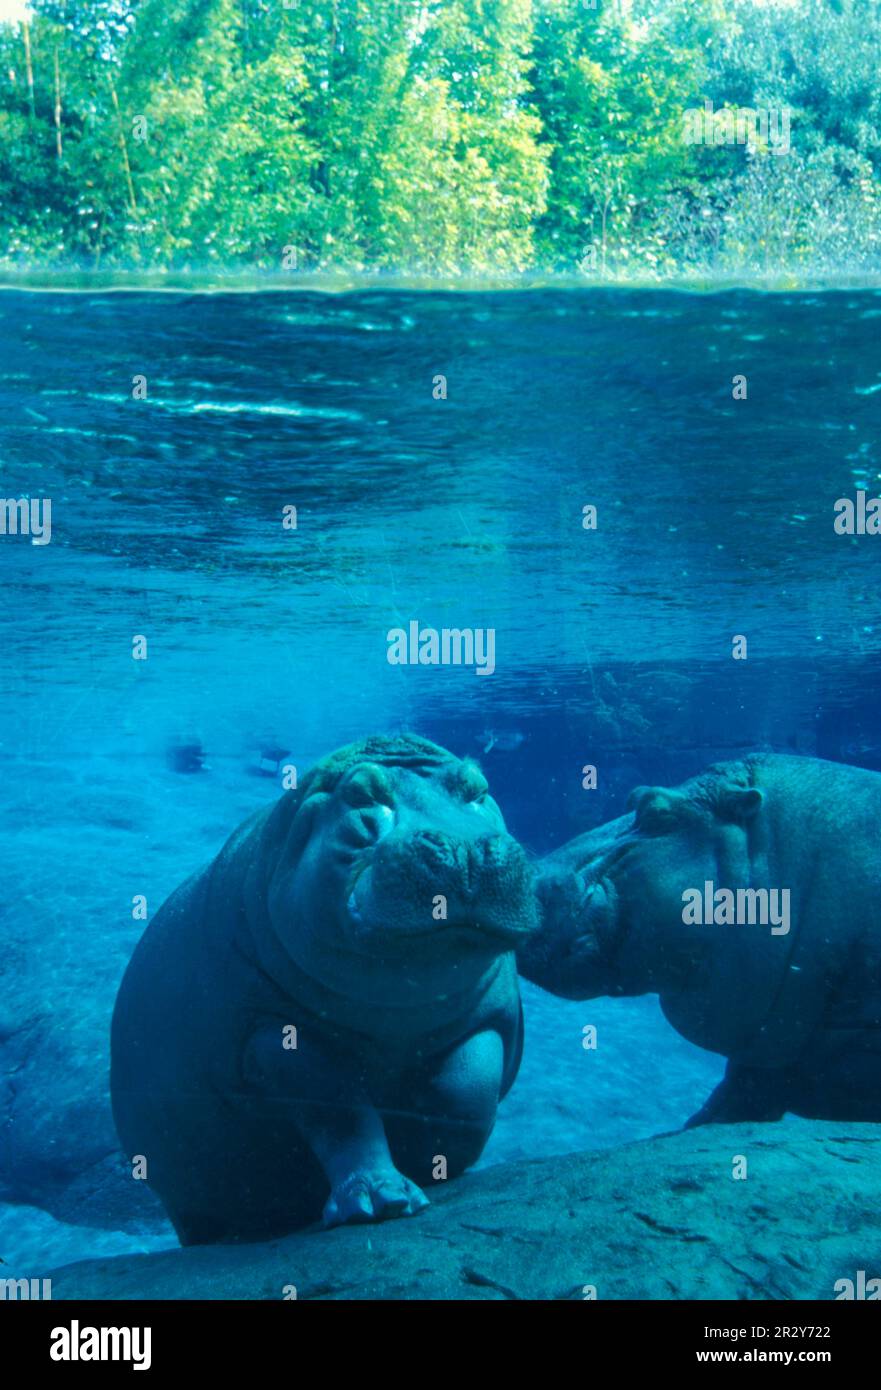 Flusspferde, Flusspferde, Flusspferde, Flusspferde (Hippopotamus amphibius), Huftiere, Säugetiere, Tiere, Hippopotamus Underwater, zwei auf Fels (S) Stockfoto